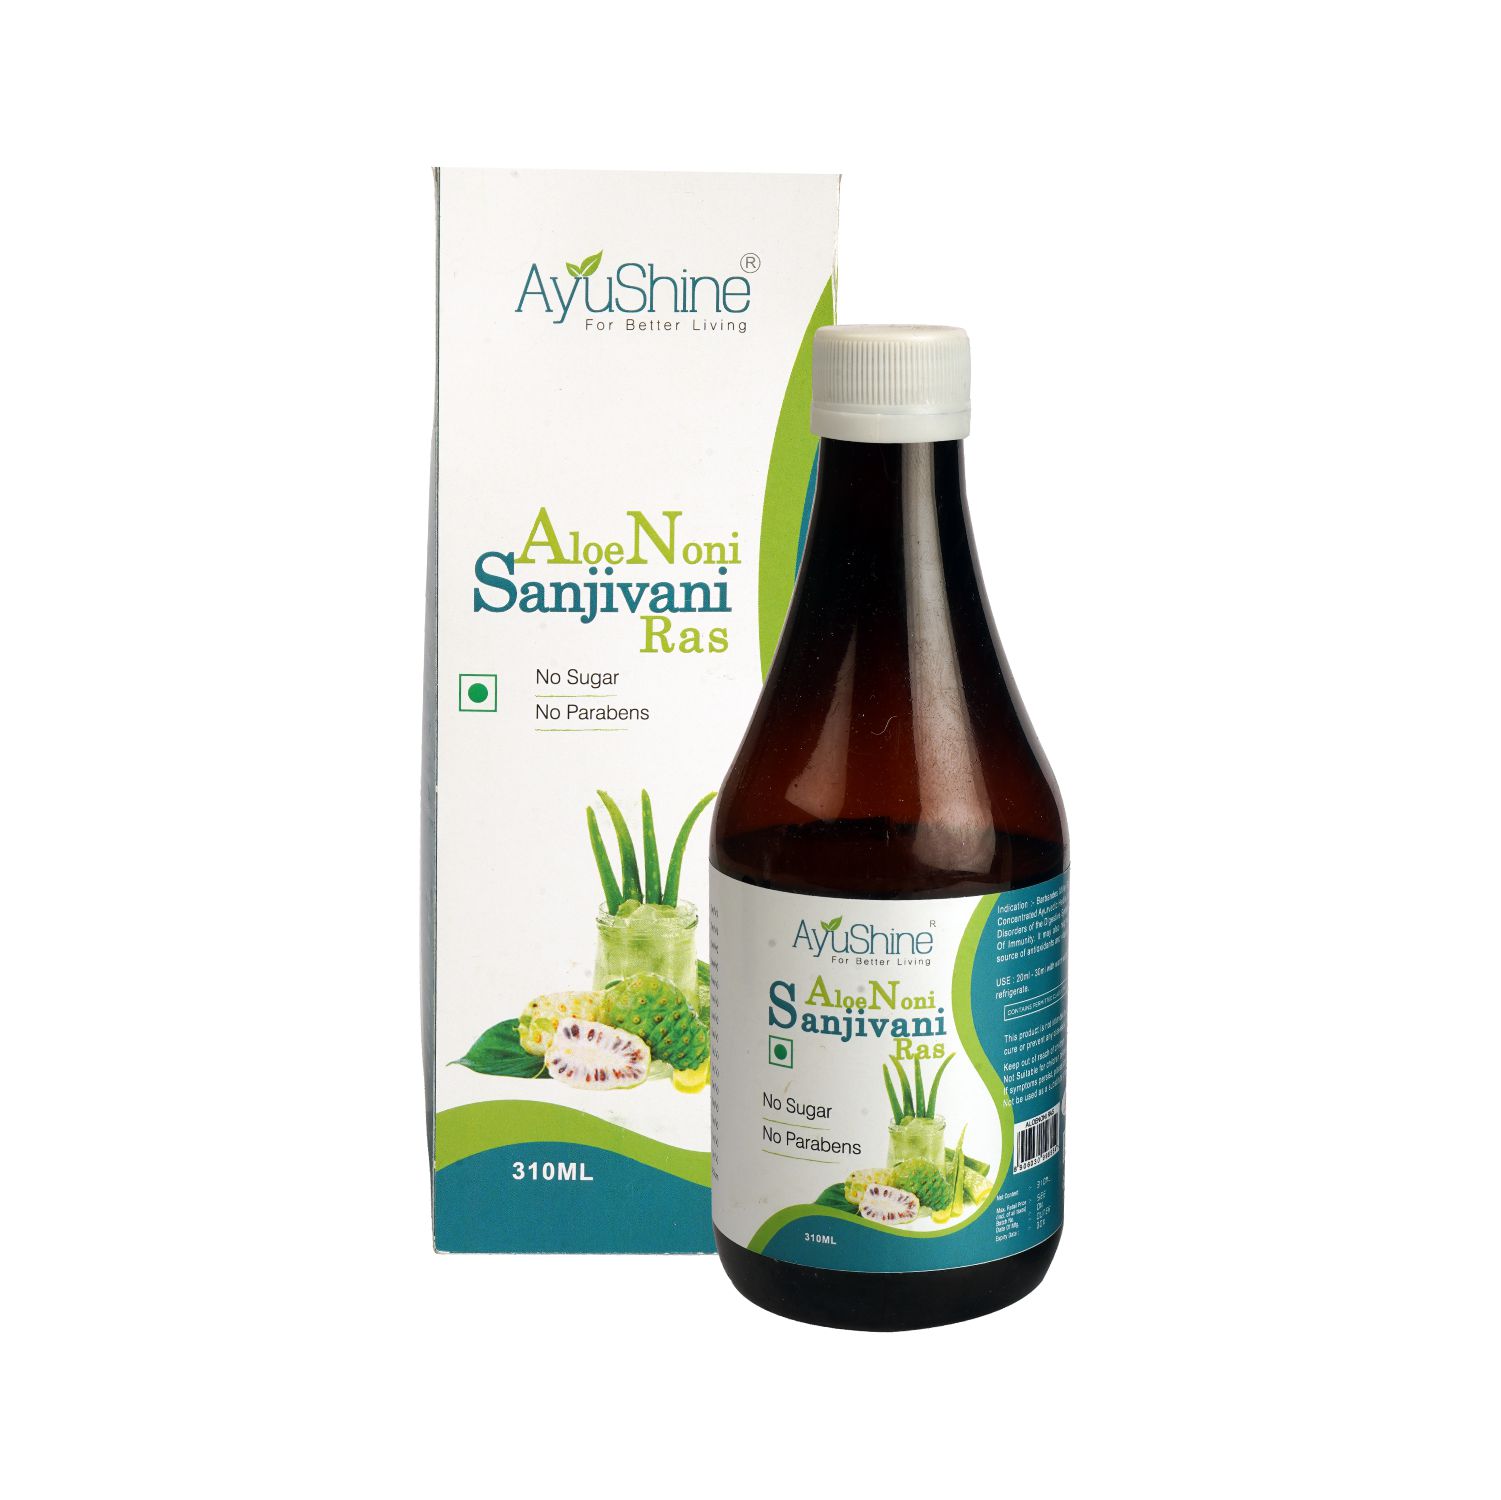 ayushine aloenoni sanjeevani ras | Rich in Antioxidants, Boosts Energy, Builds Immunity, Natural Detoxifier